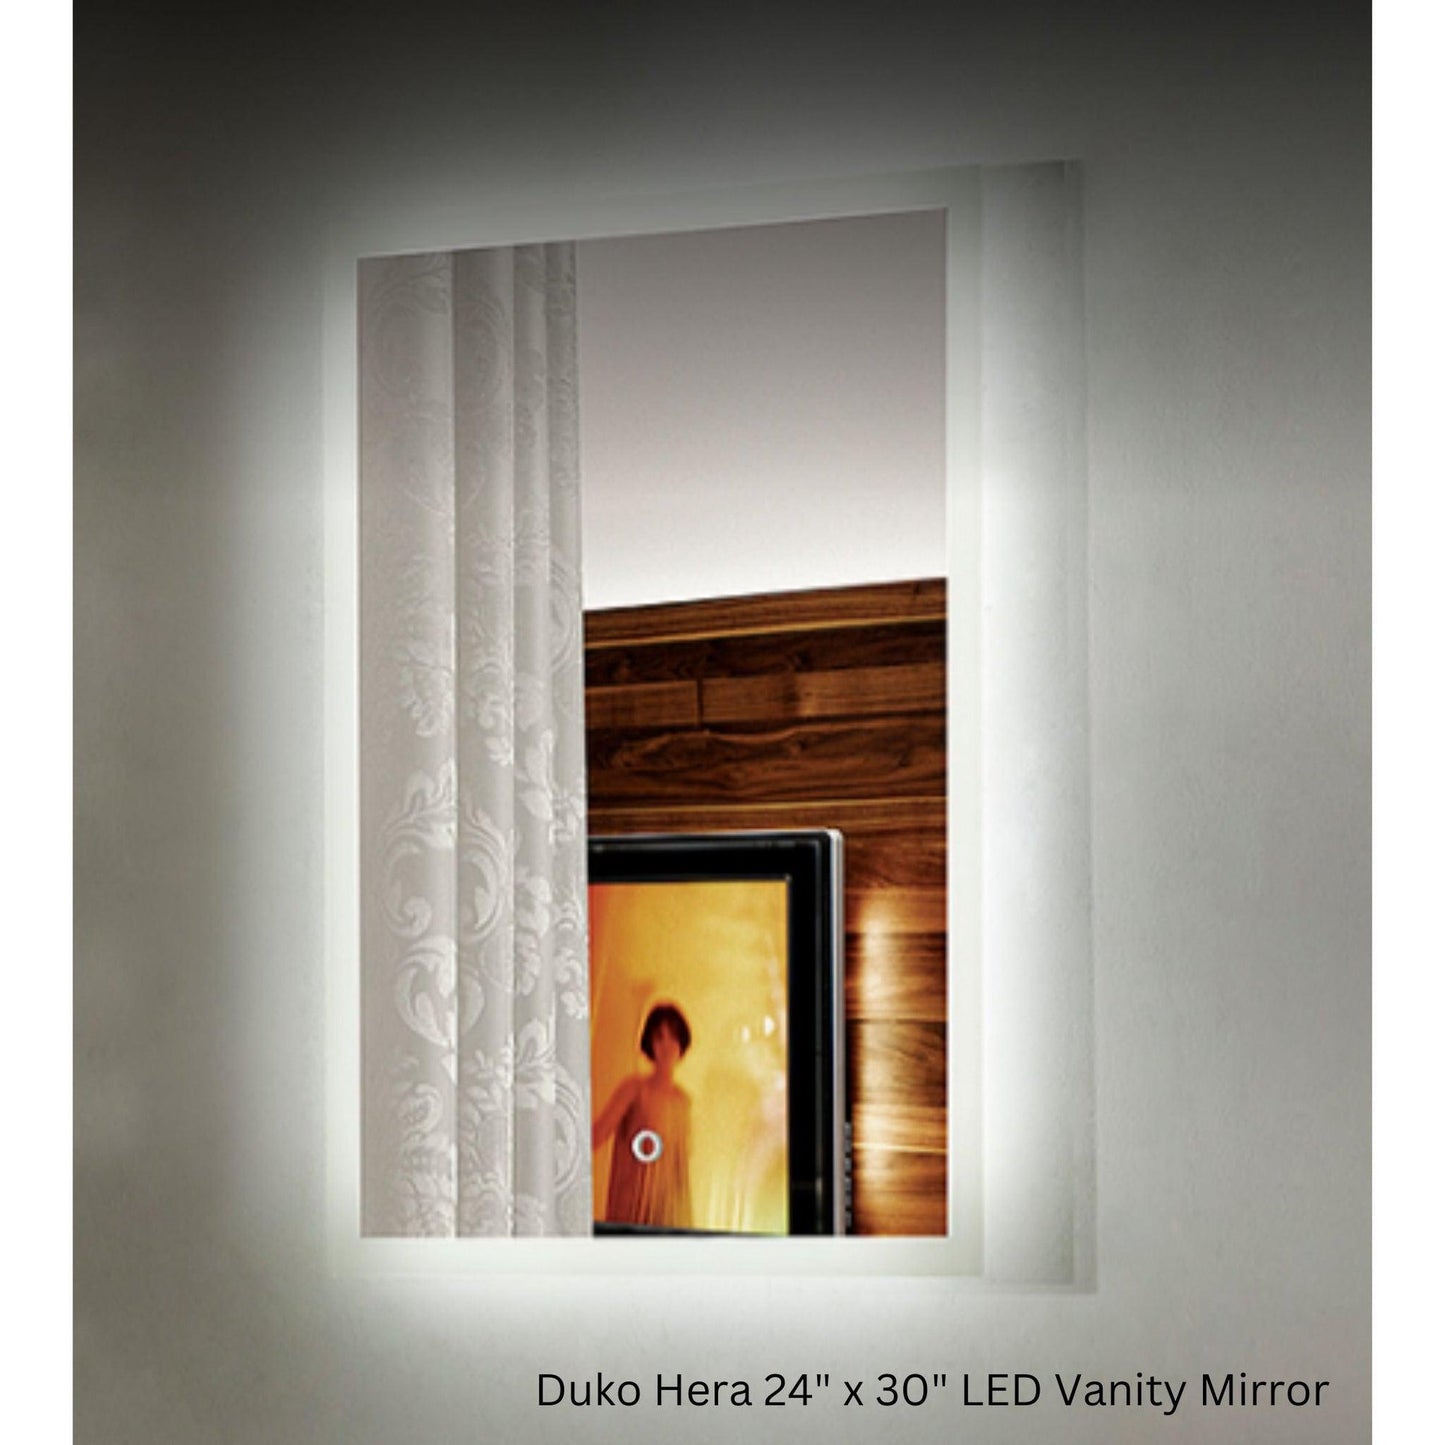 Duko Hera 48" x 30" Bathroom Vanity LED Mirror